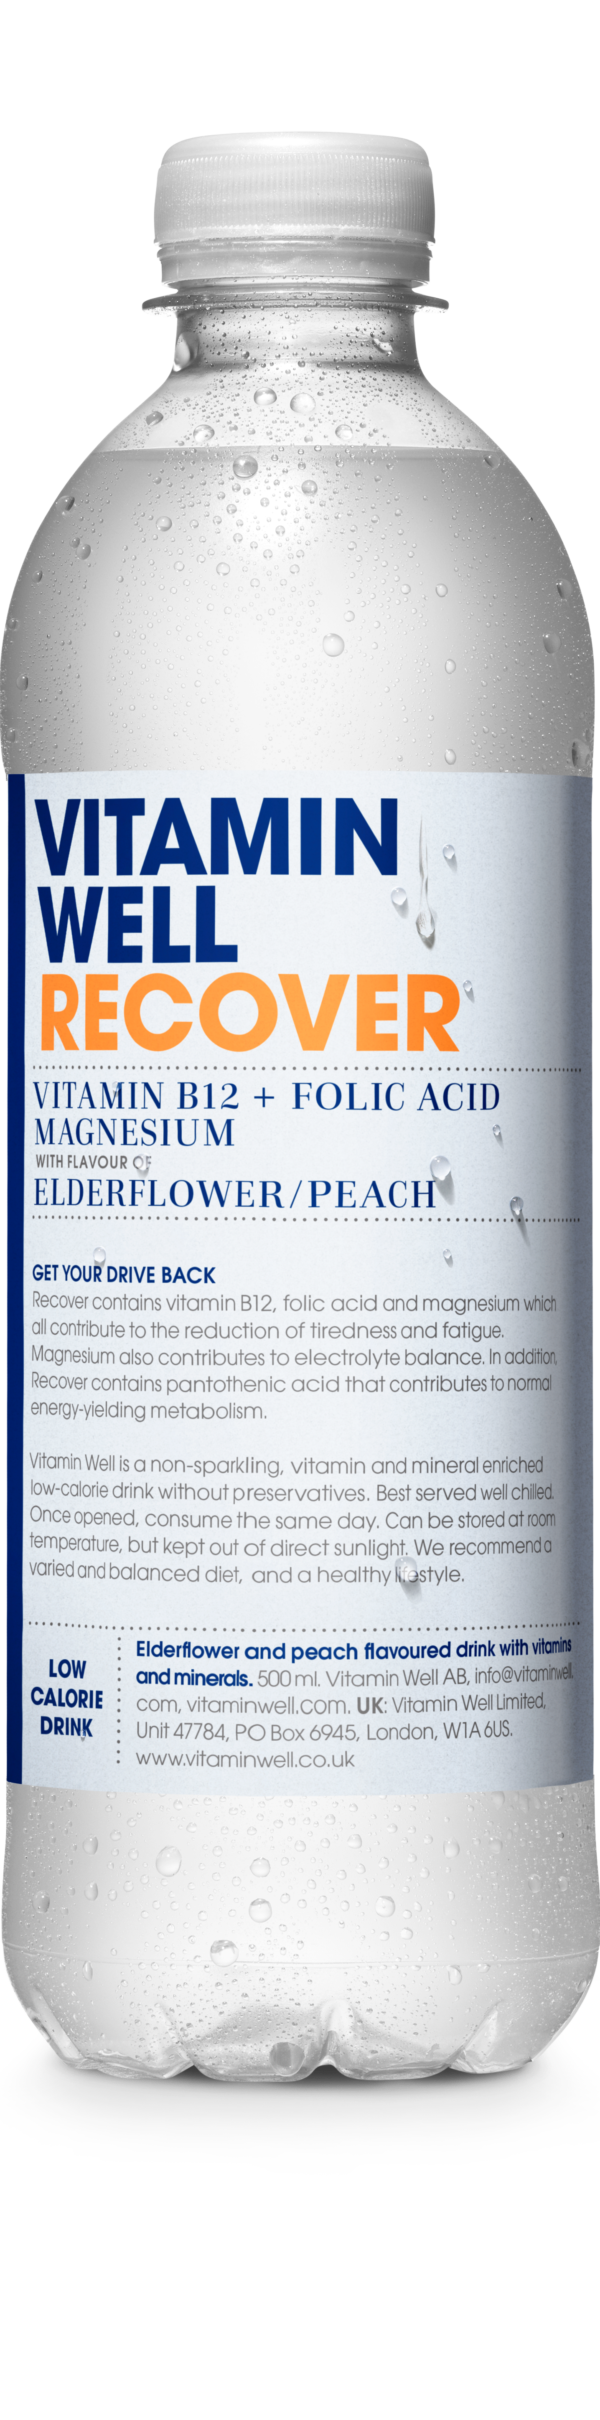 Vitamin Well RECOVER - Elderflower & Peach 12 x 500ml